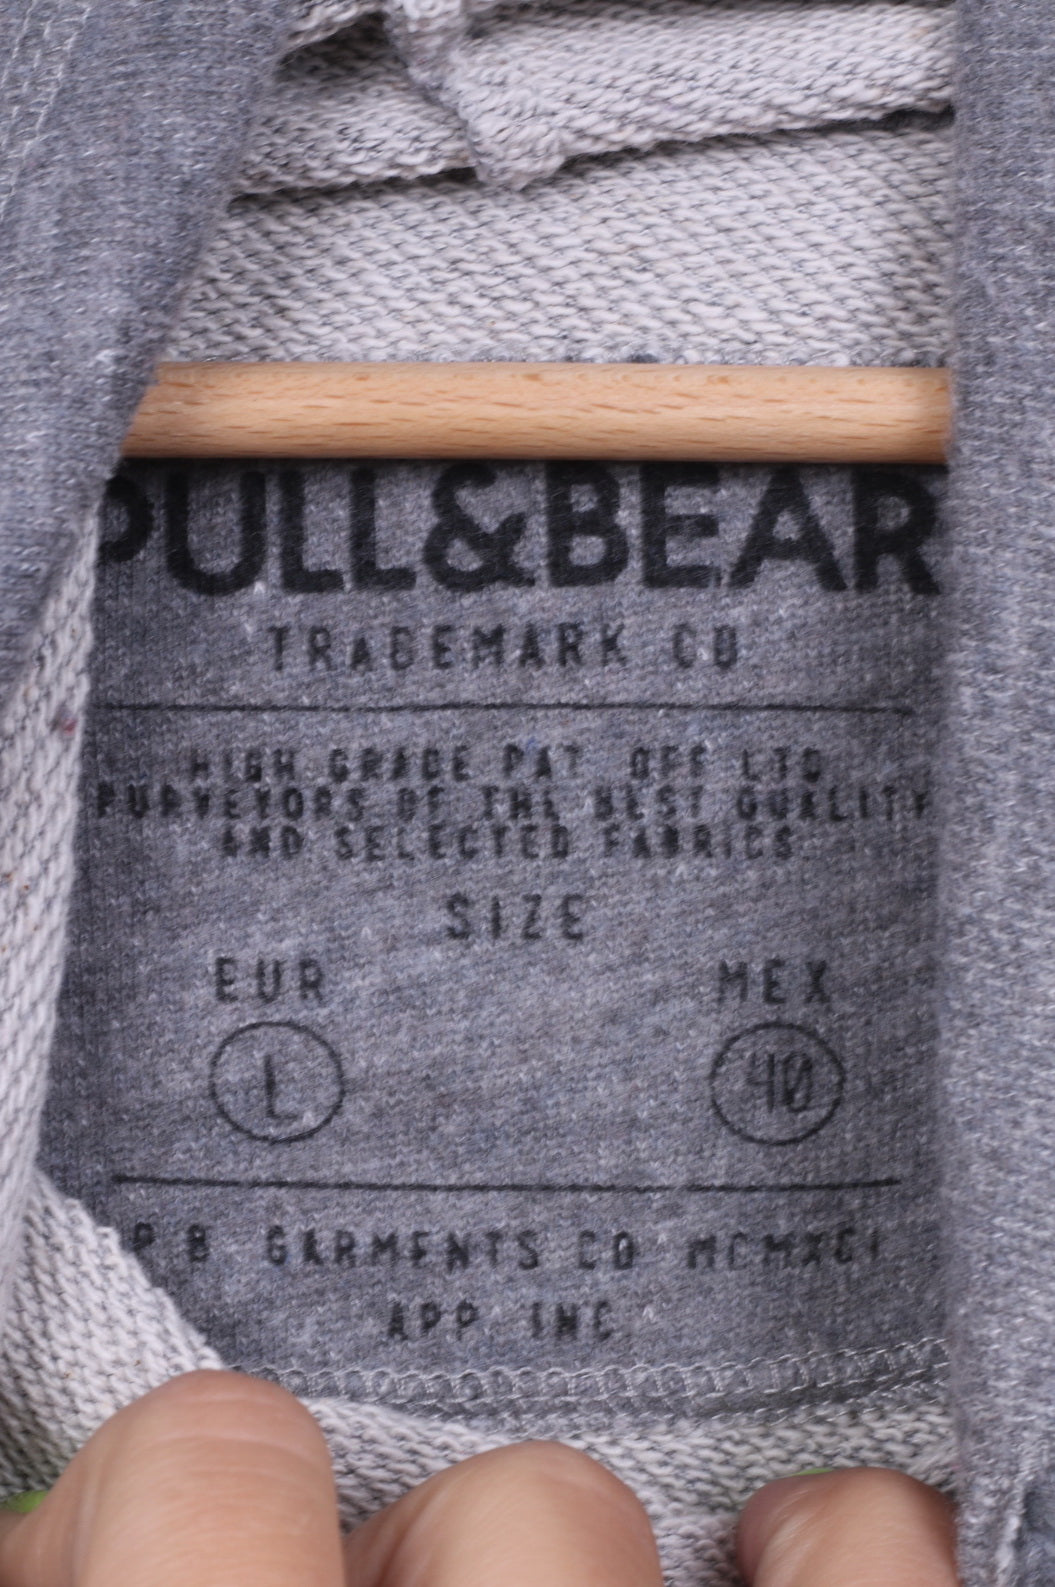 Pull&Bear Mens L Sweatshirt Grey Sport Cotton Livin For The City